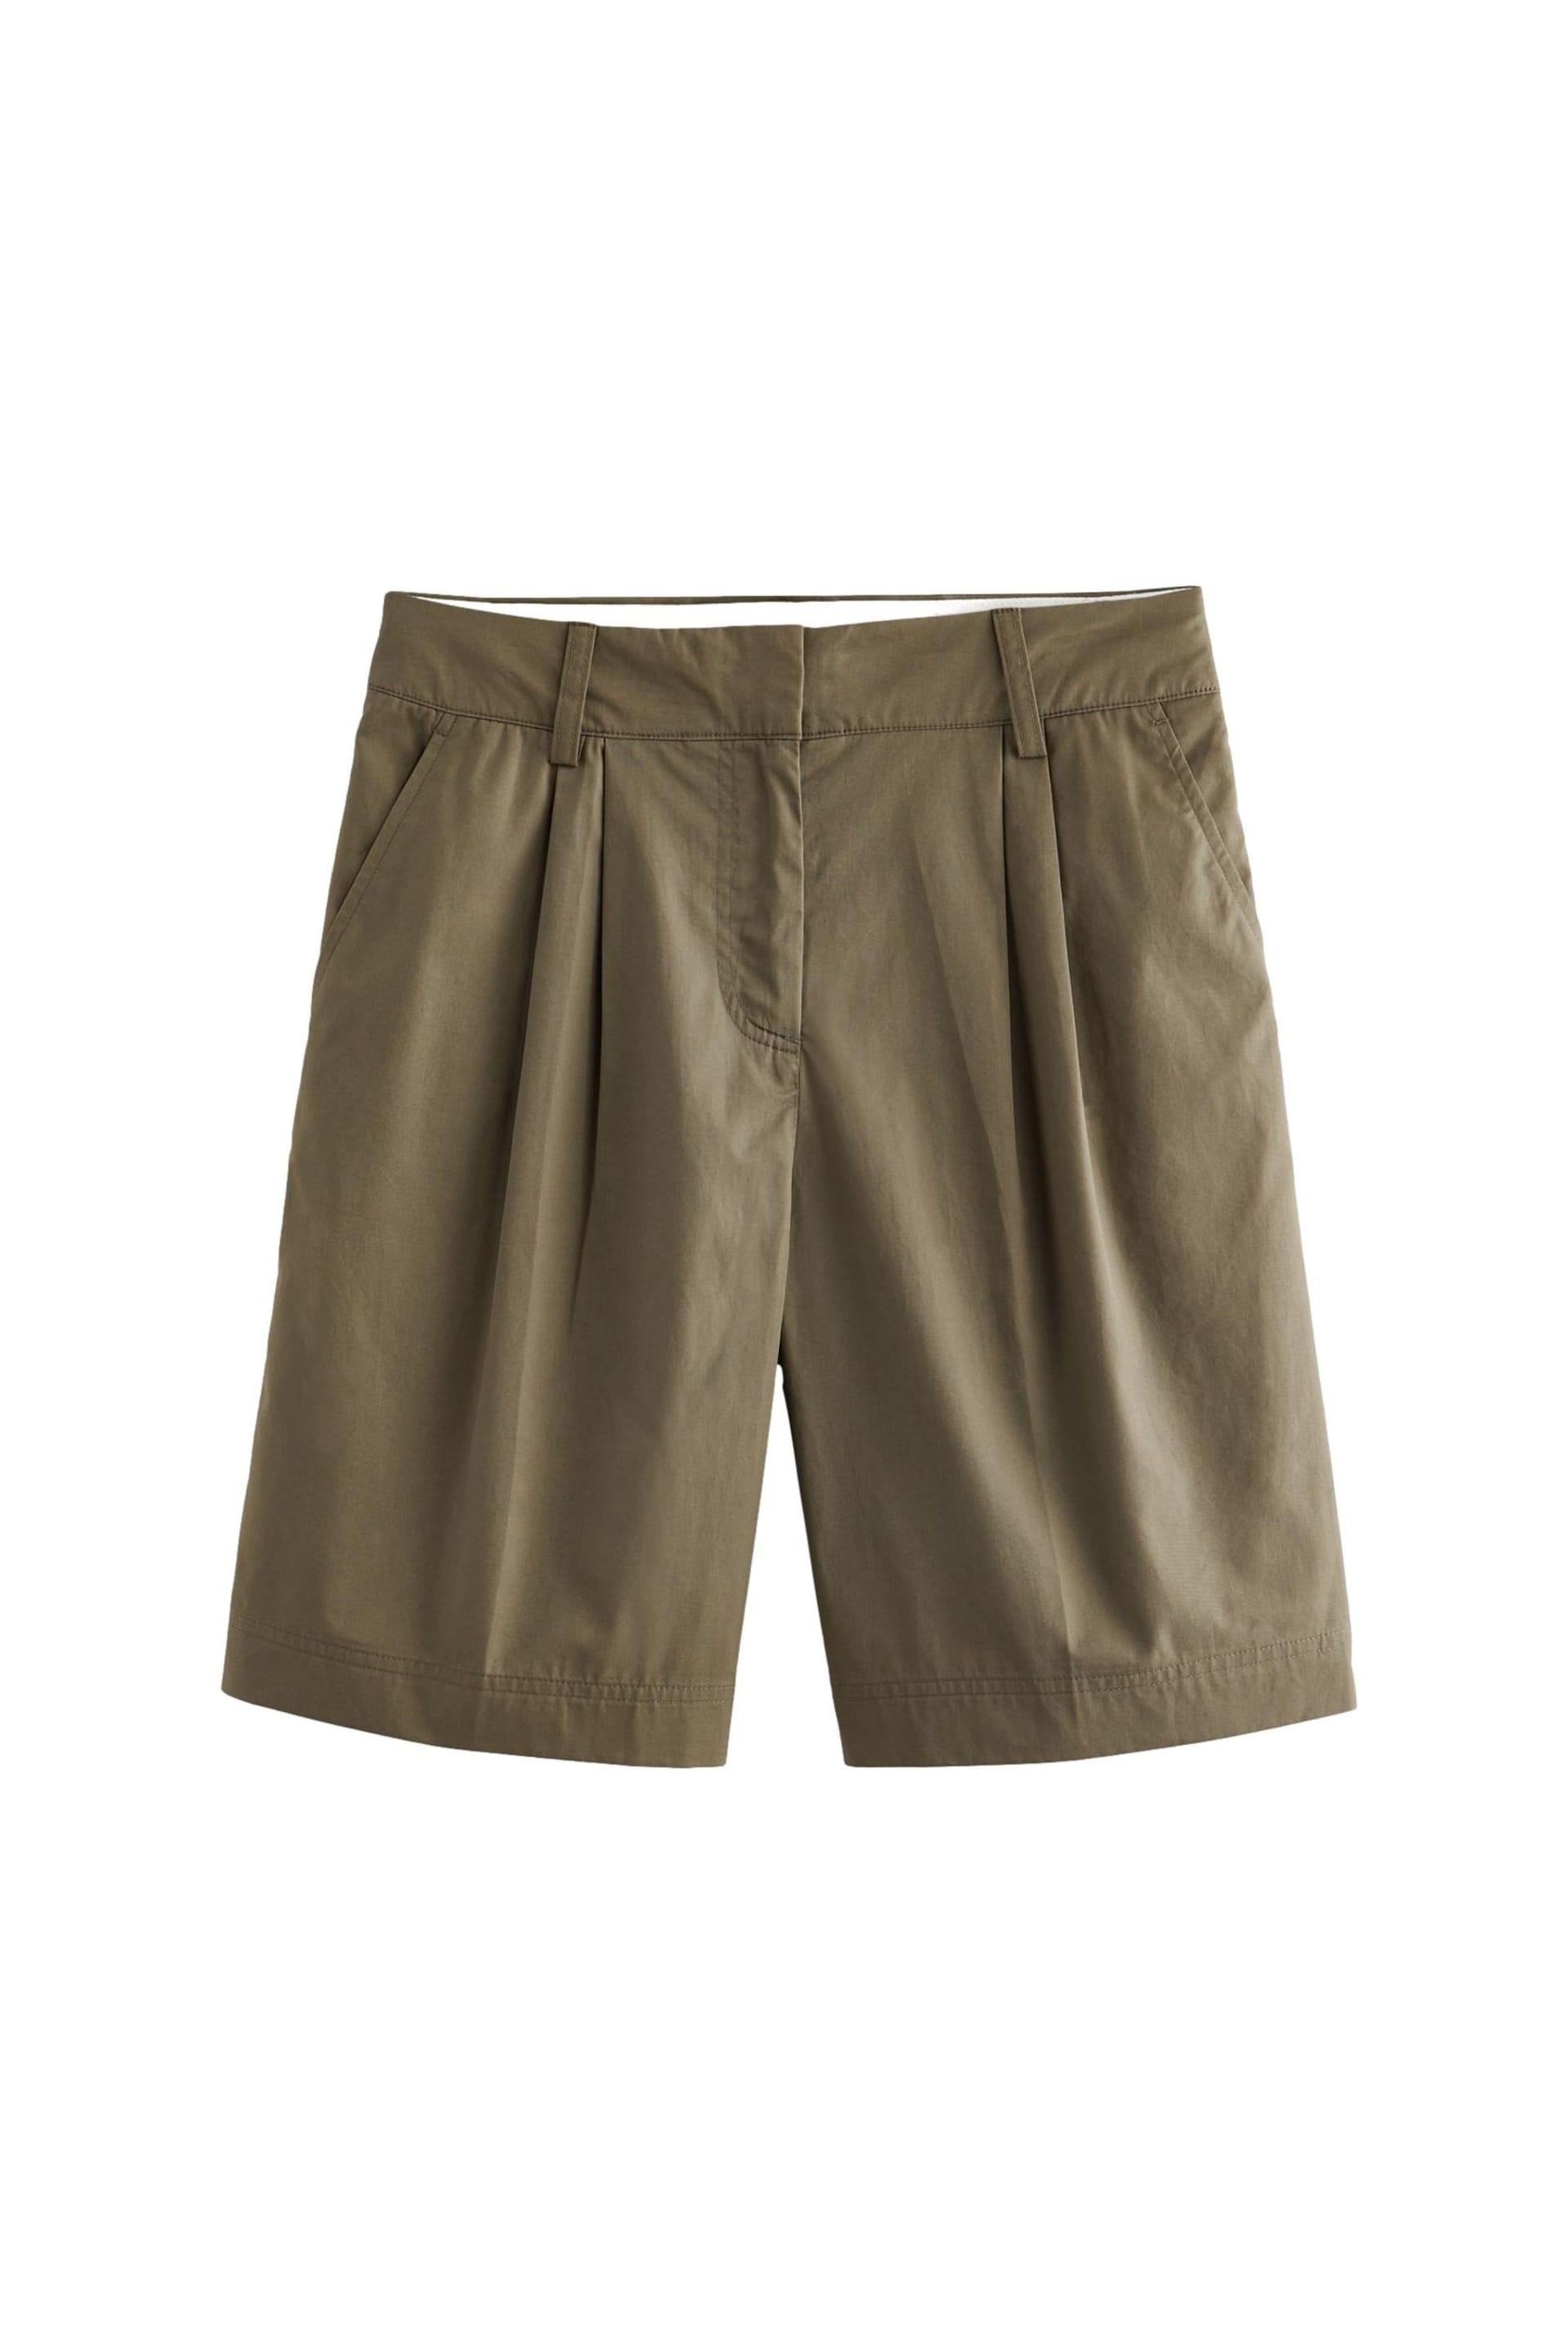 Khaki Green Bermuda Knee Length Shorts - Image 5 of 6